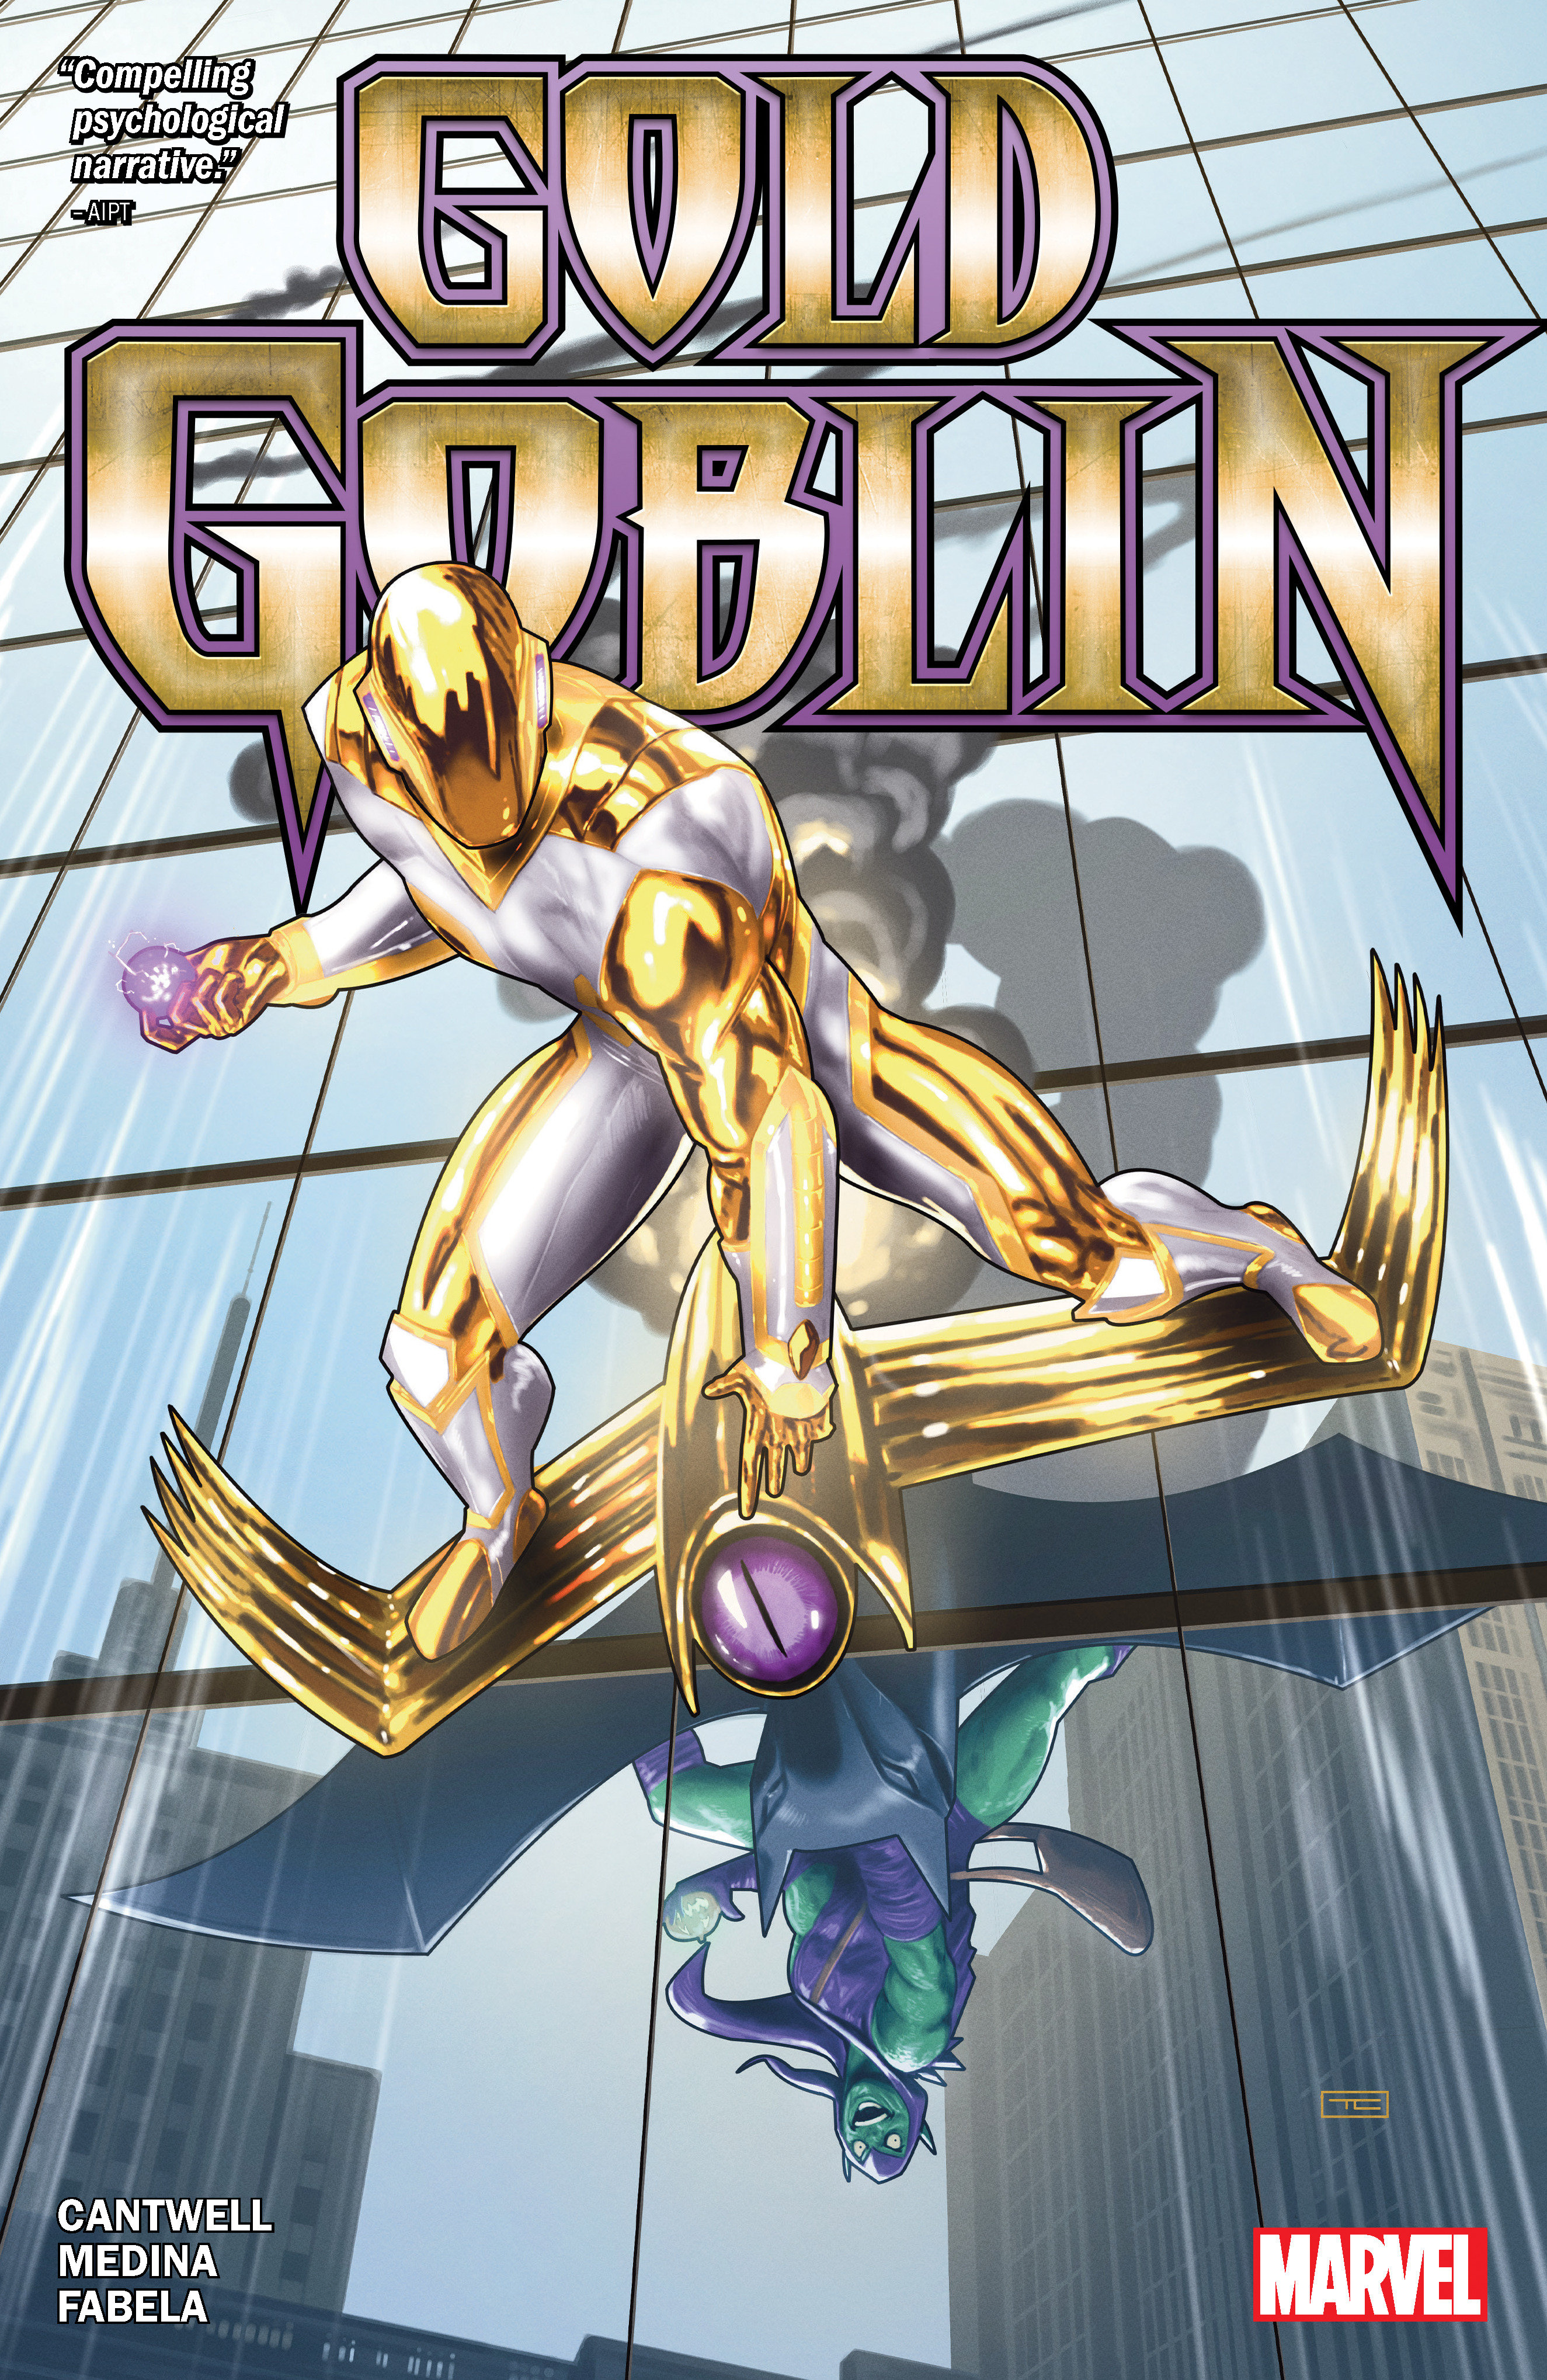 Gold Goblin Graphic Novel